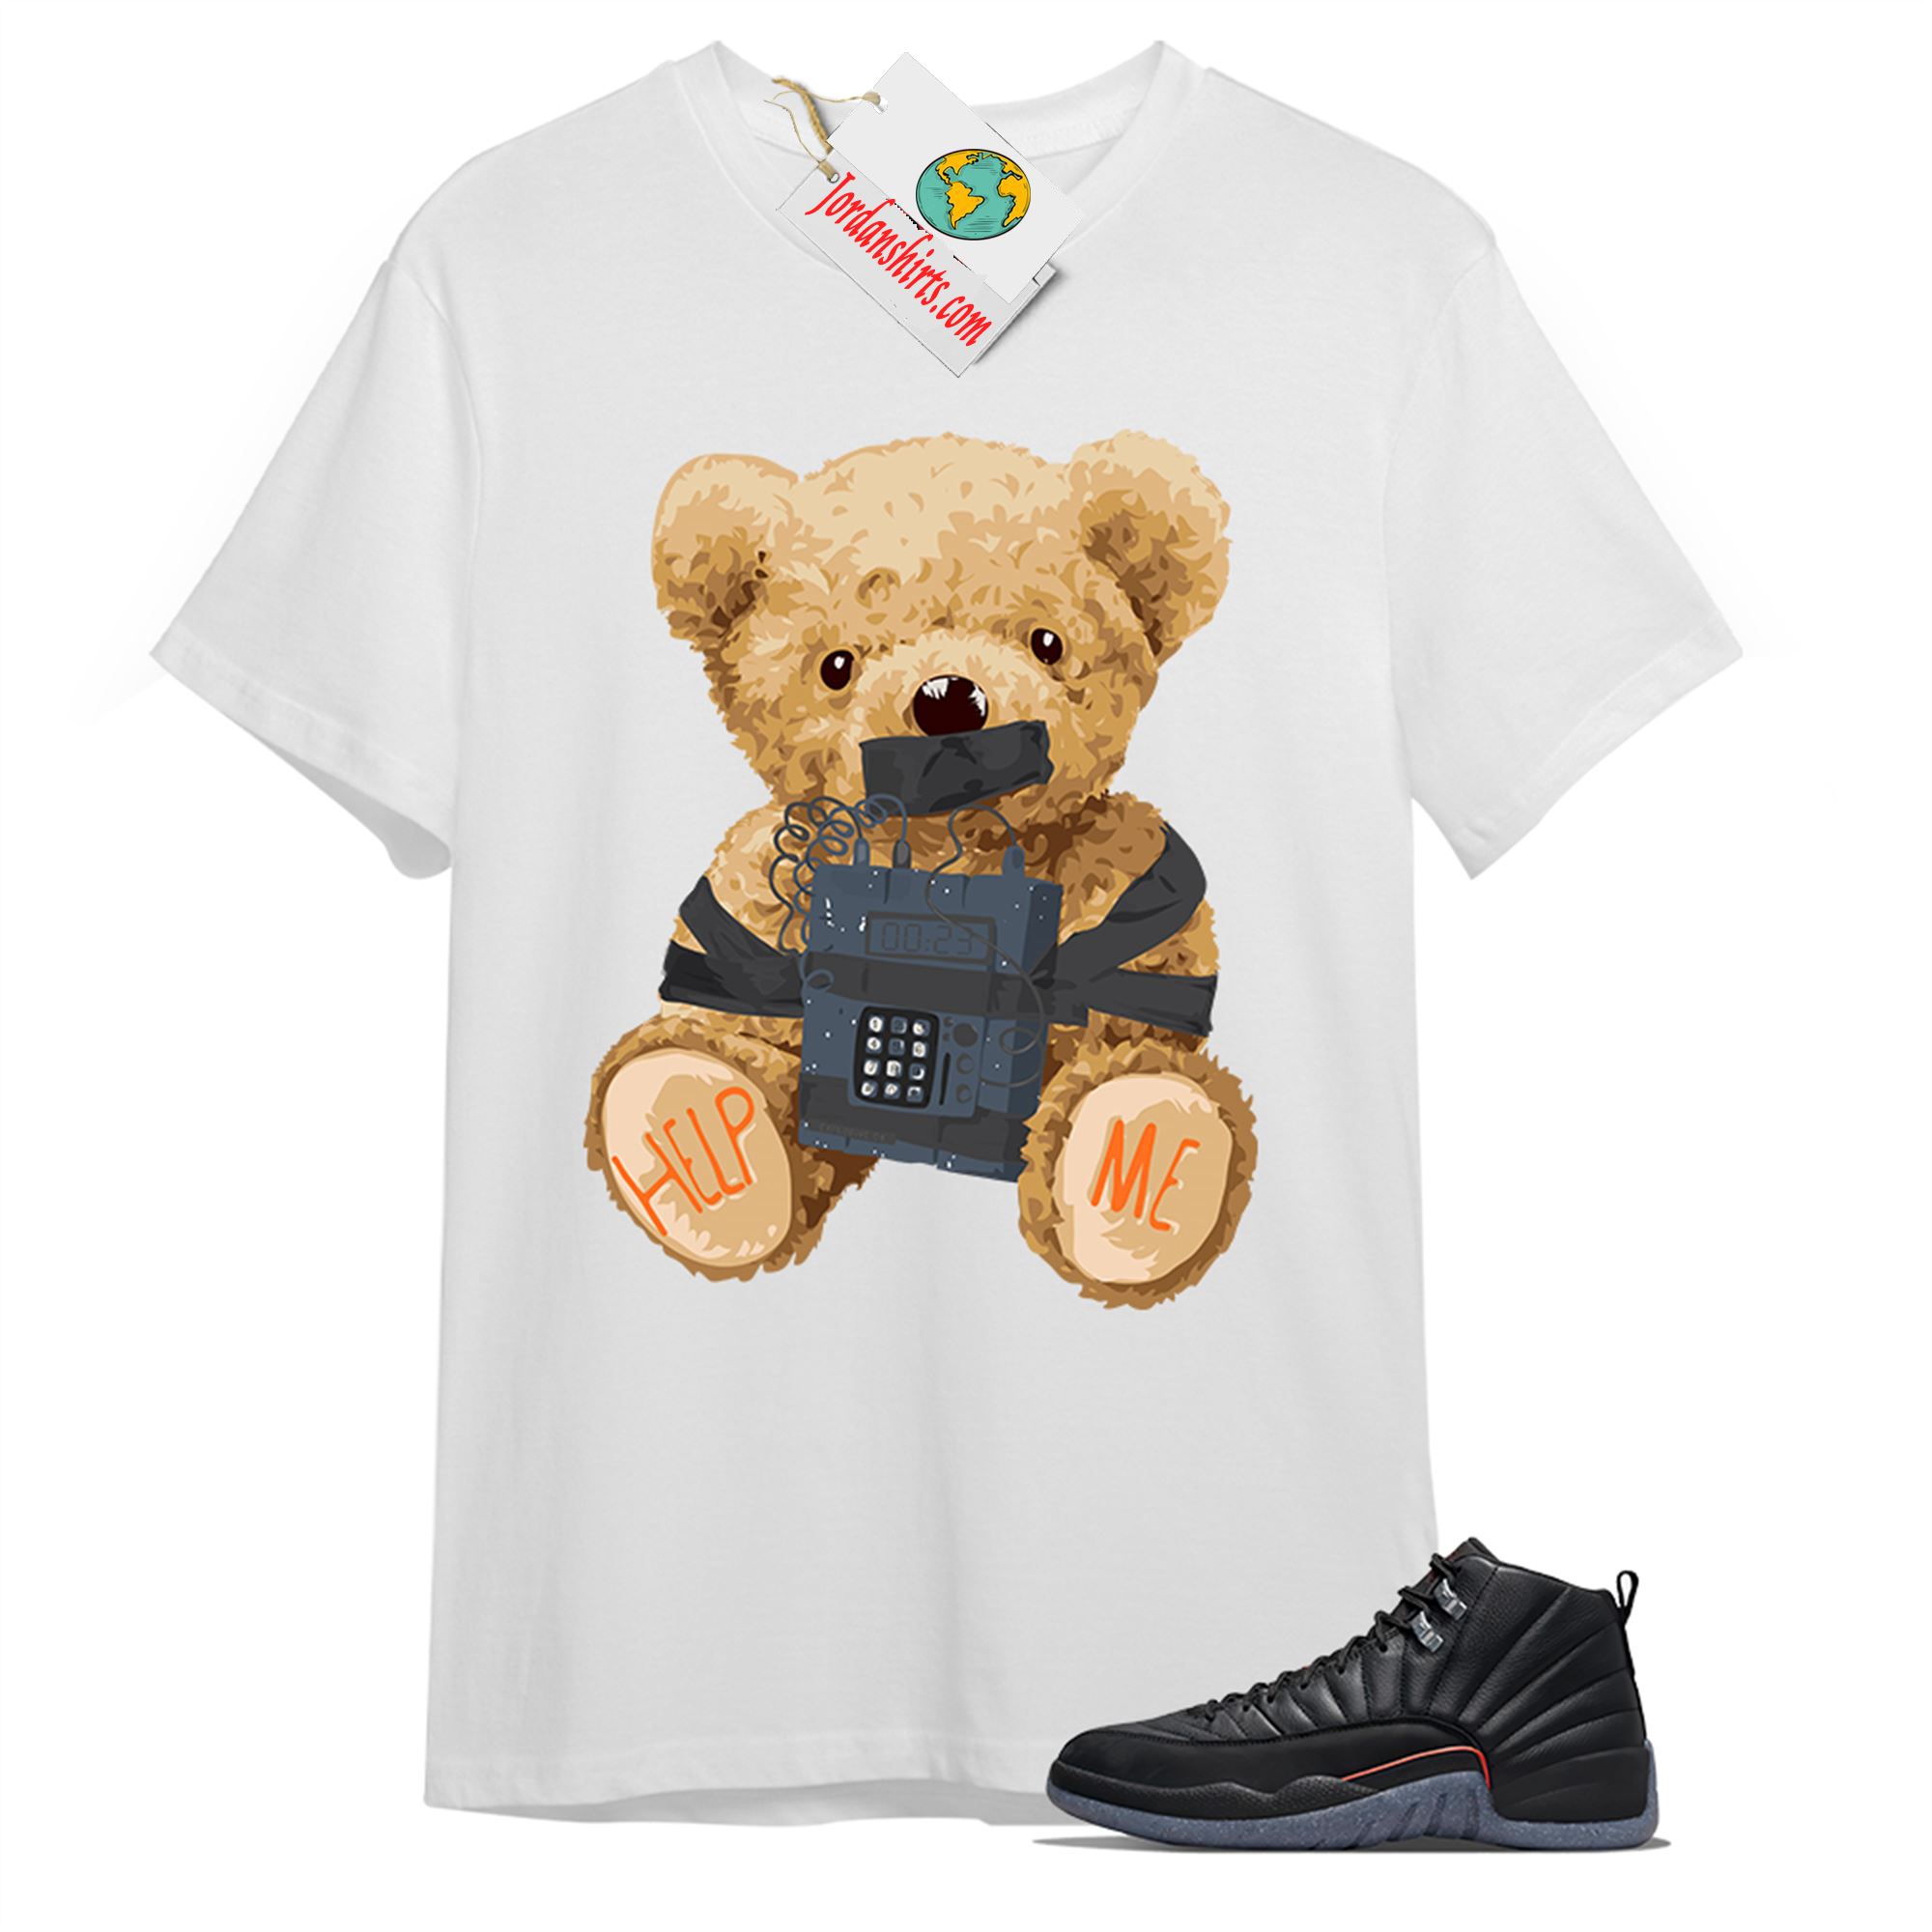 Jordan 12 Shirt, Teddy Bear Bomb White T-shirt Air Jordan 12 Utility Grind 12s Plus Size Up To 5xl